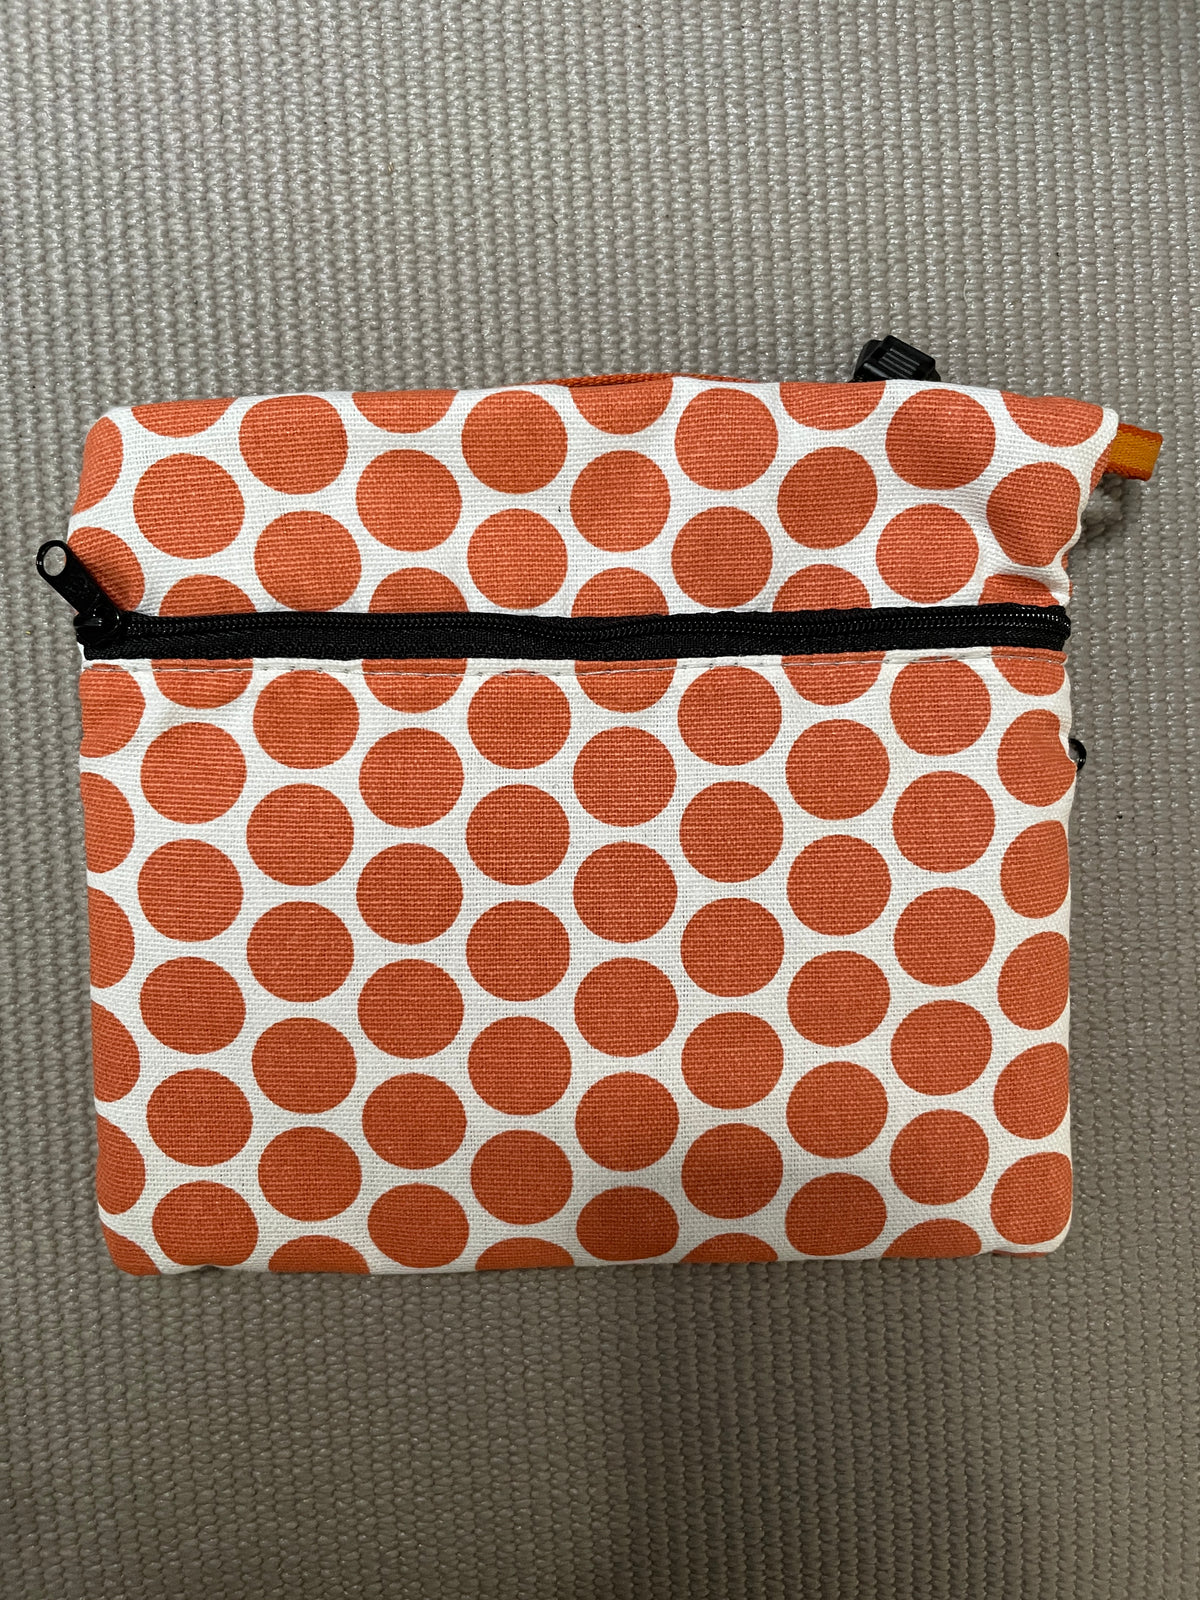 3 Zip Bag Orange-Polka Dot Print Fabric